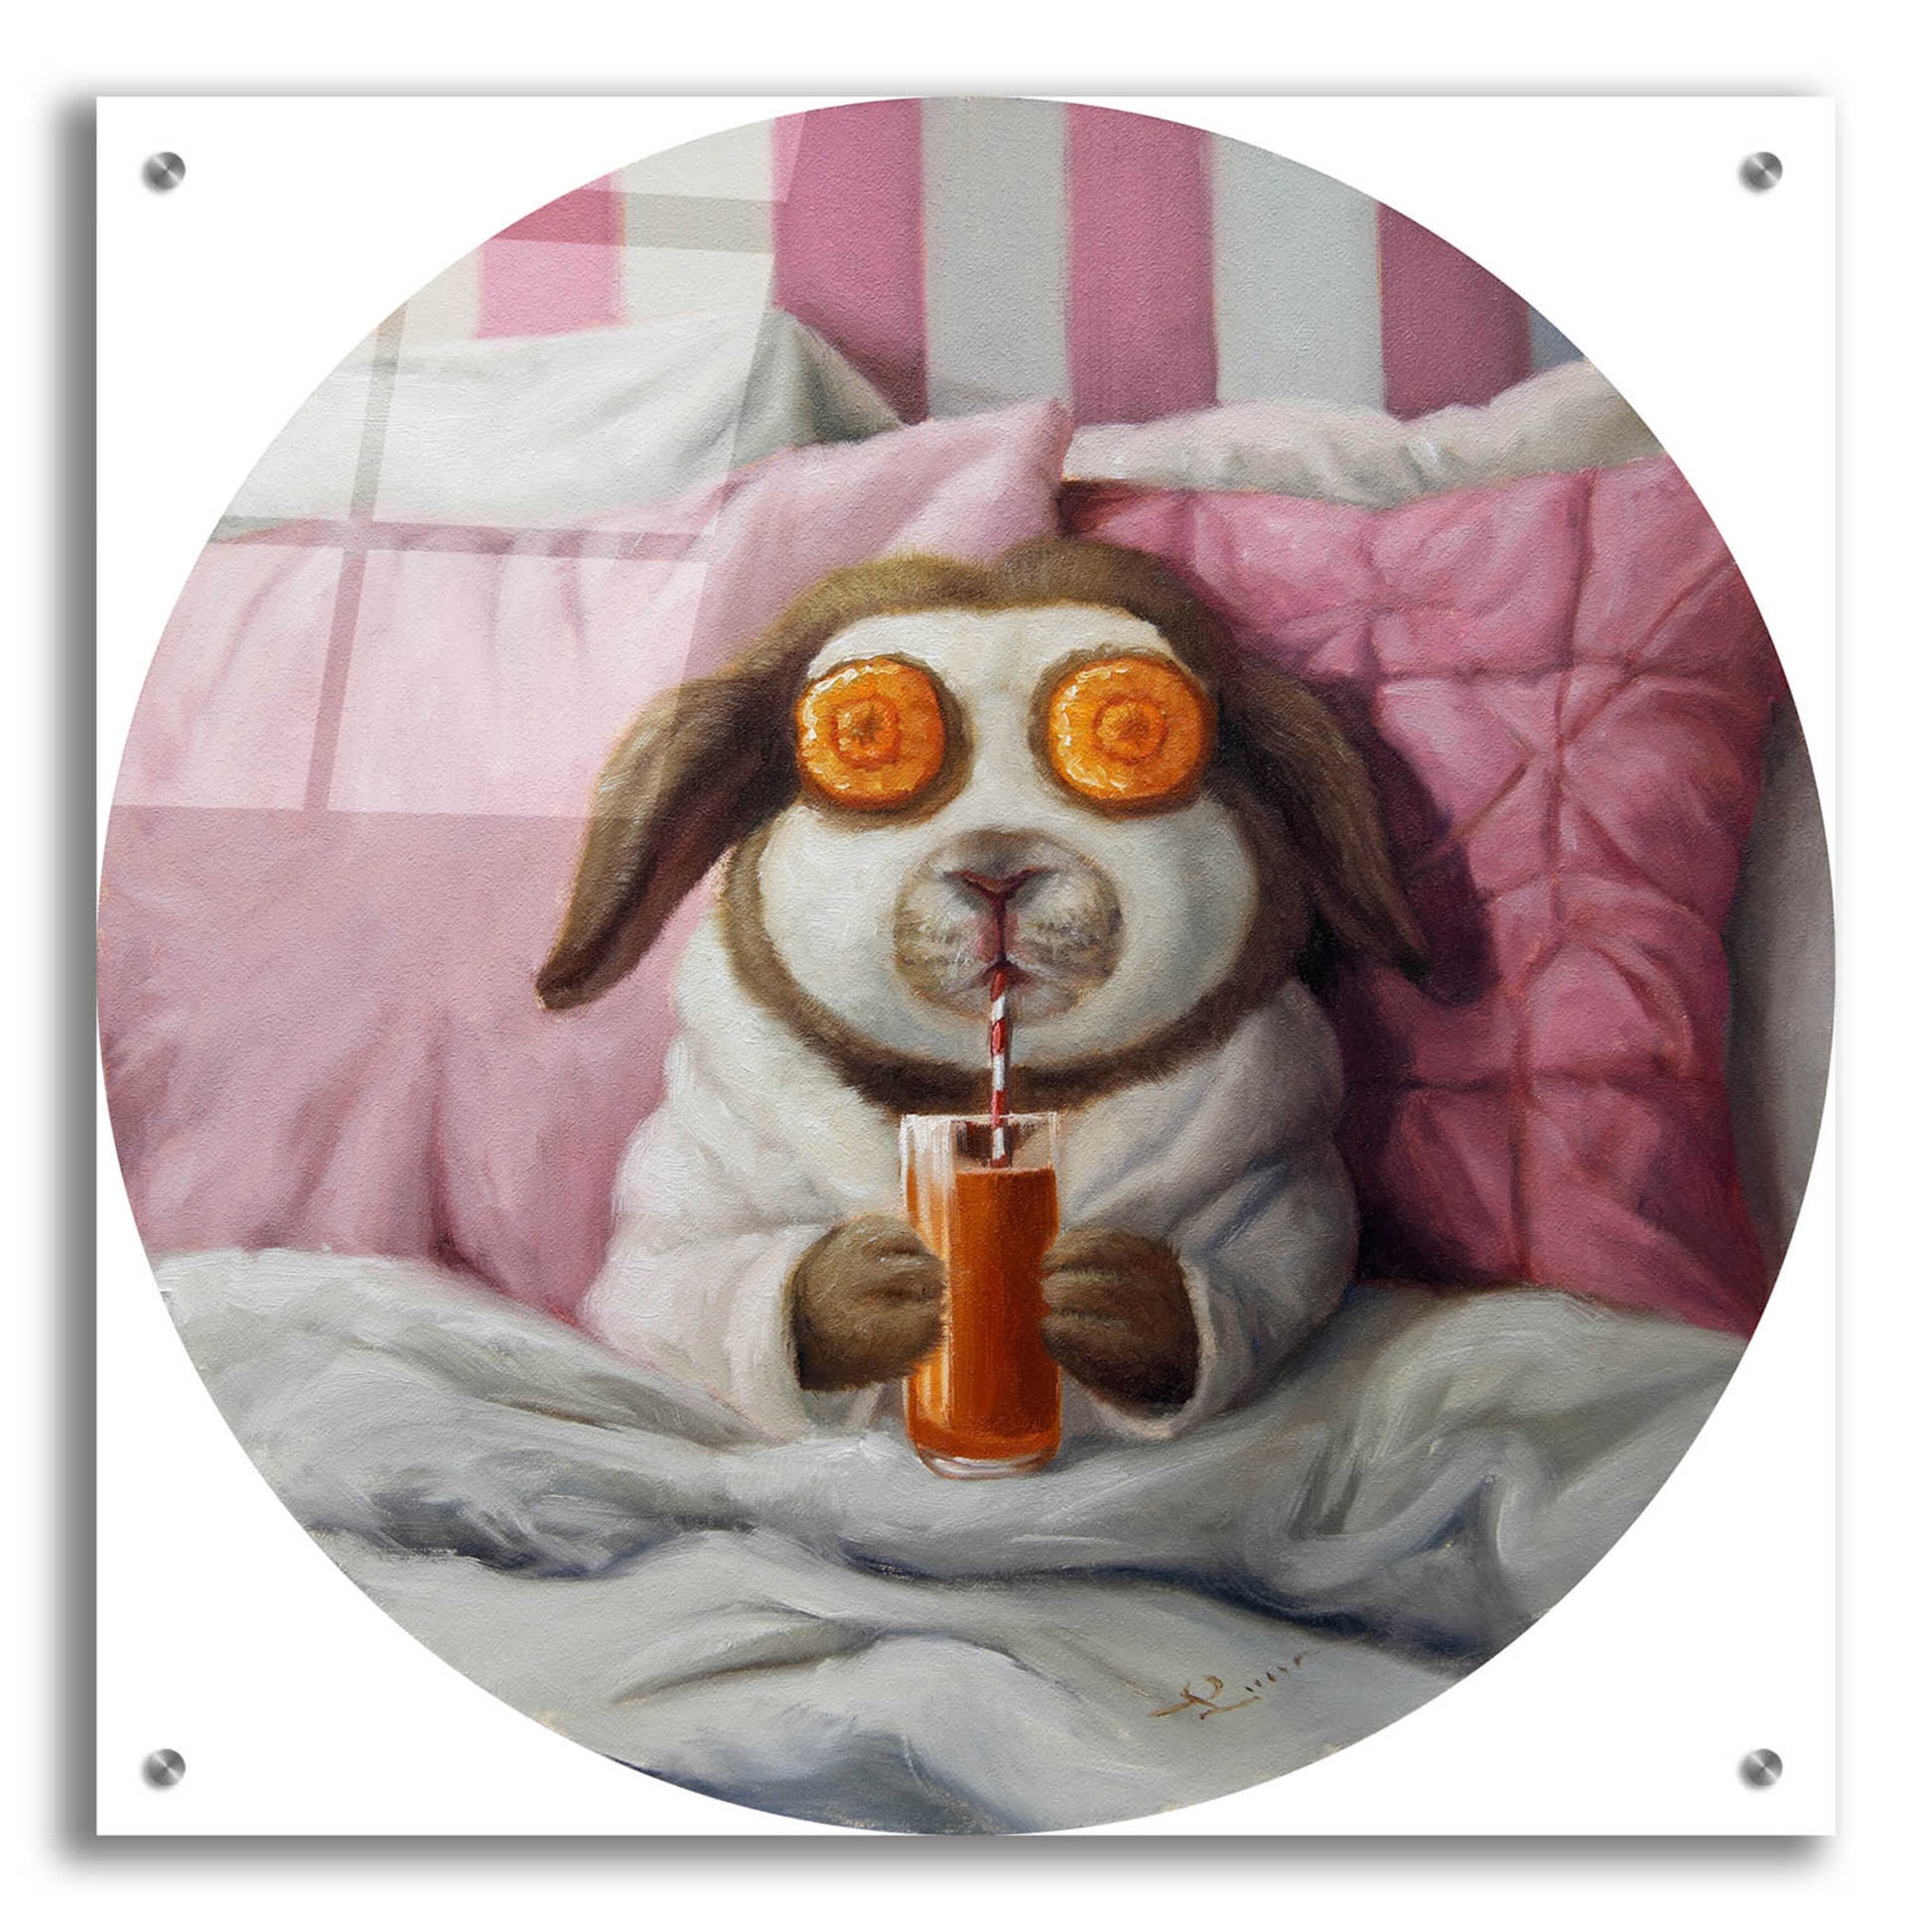 Epic Art 'Personal Carrot Day' by Lucia Heffernan,24x24